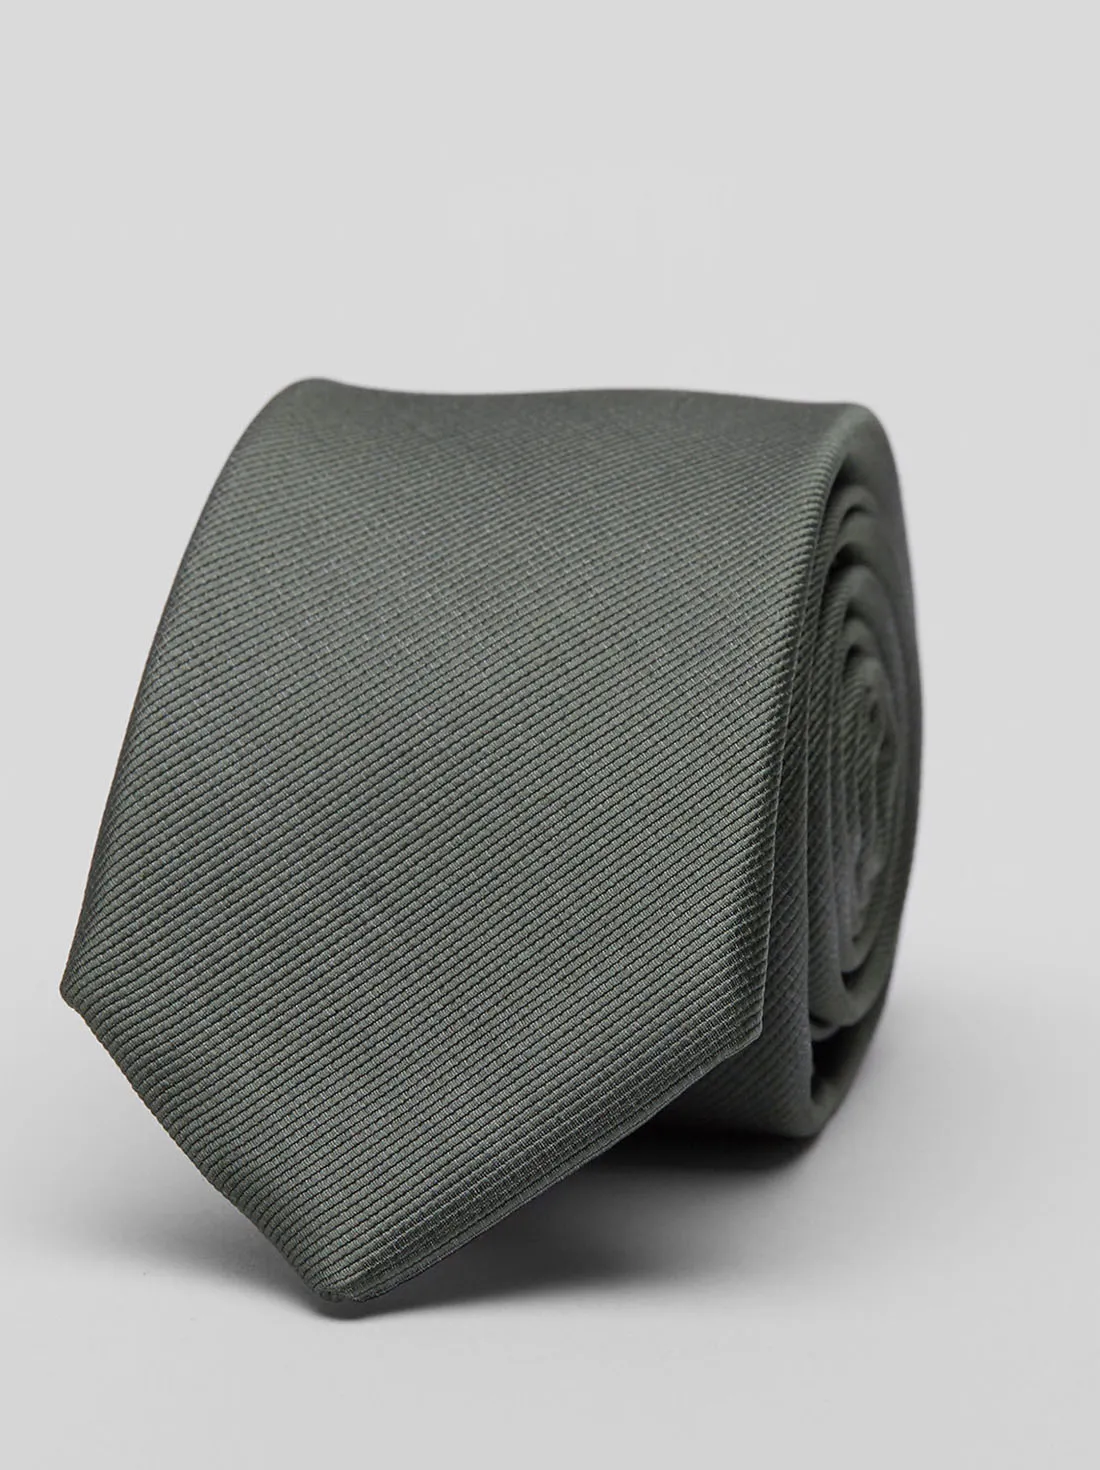 Olive Green Tie Plain